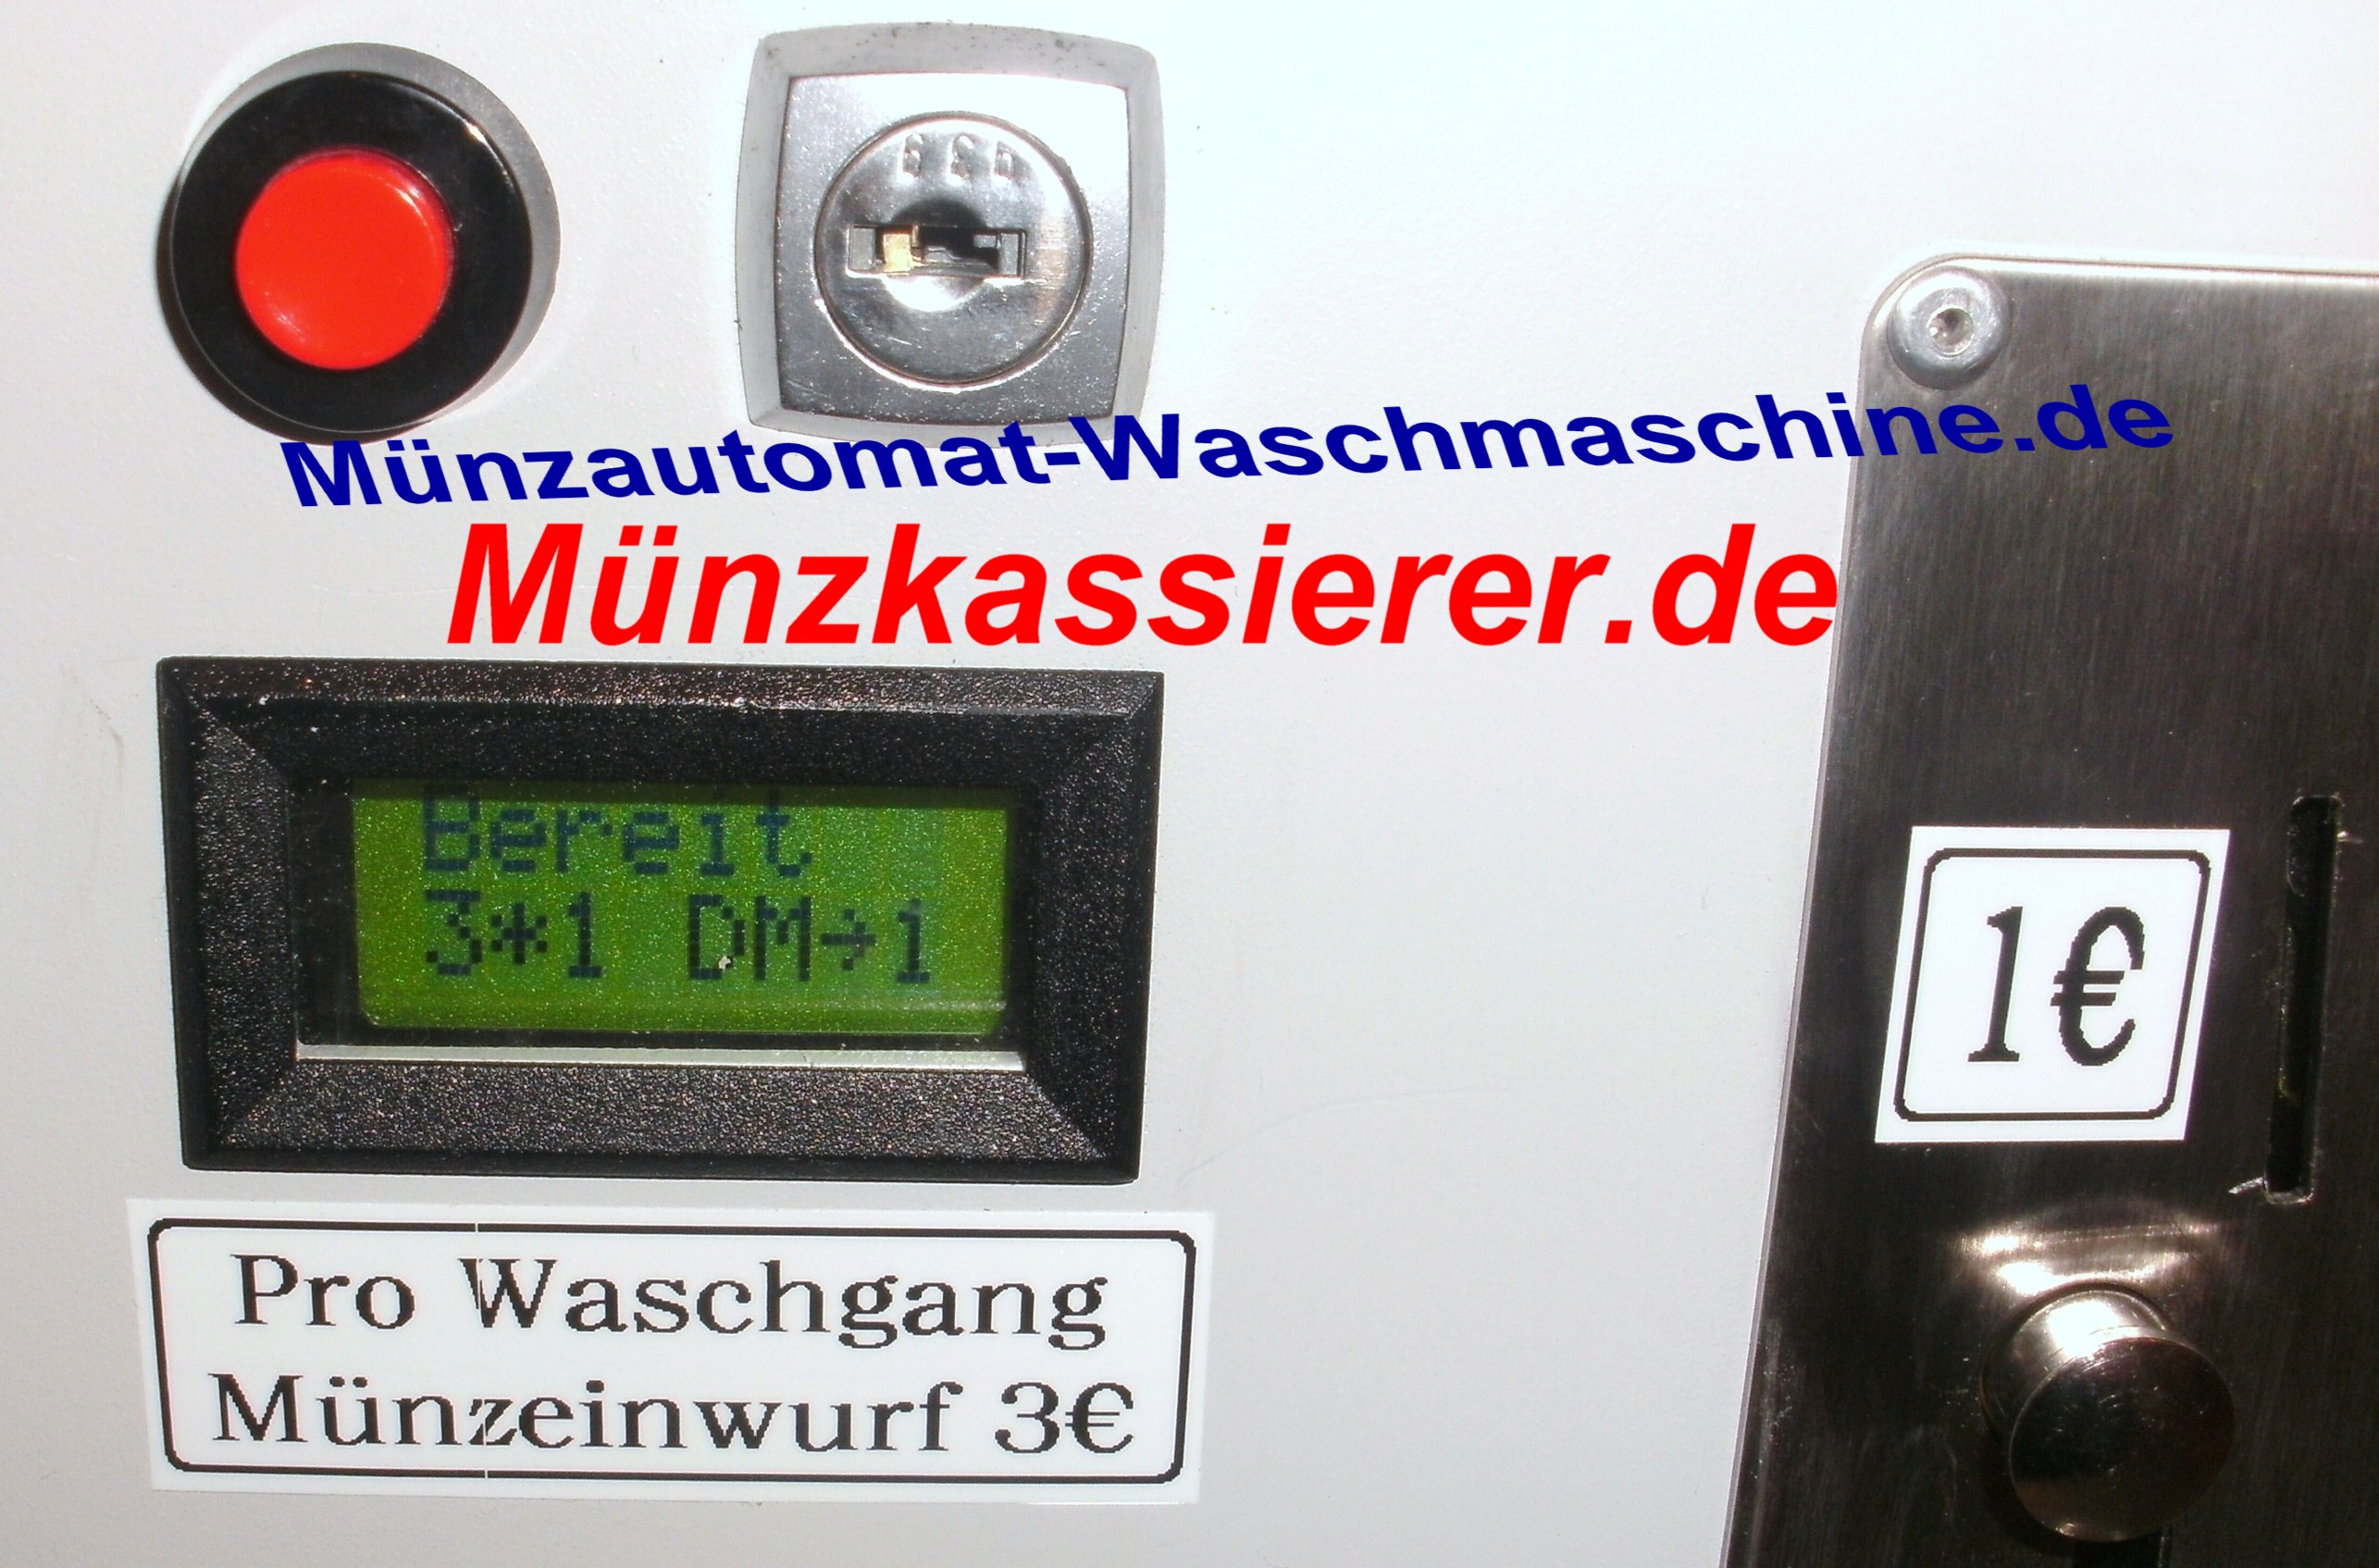 NZR 0215 ZMZ0215 Münzautomat Waschmaschine Trockner 275€